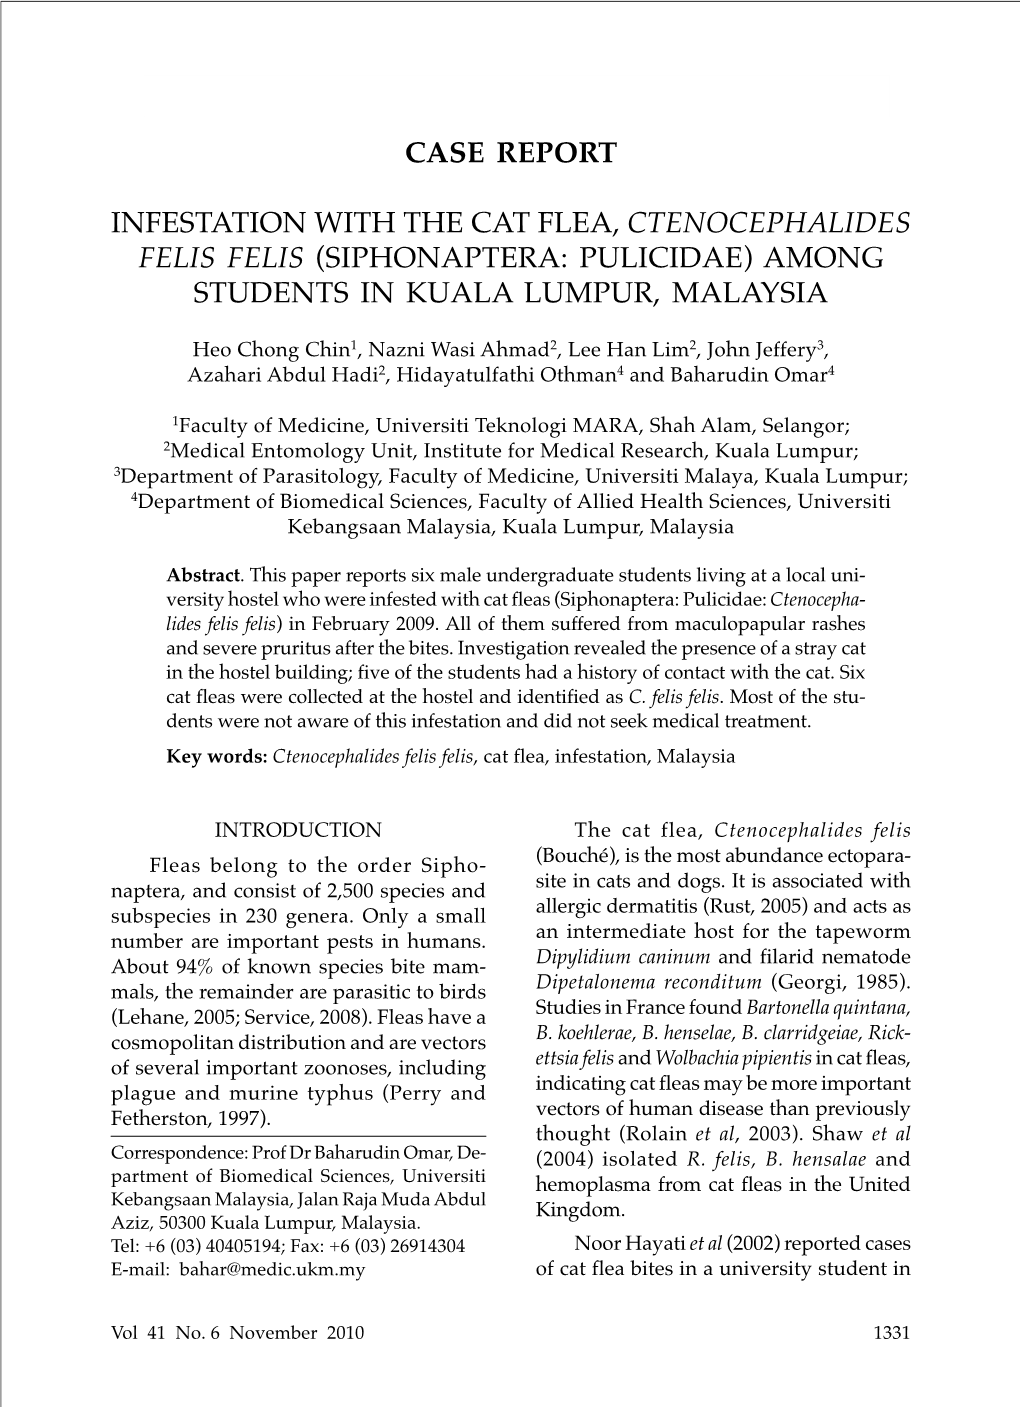 Case Report. Infestation with the Cat Flea, Ctenocephalides Felis Felis